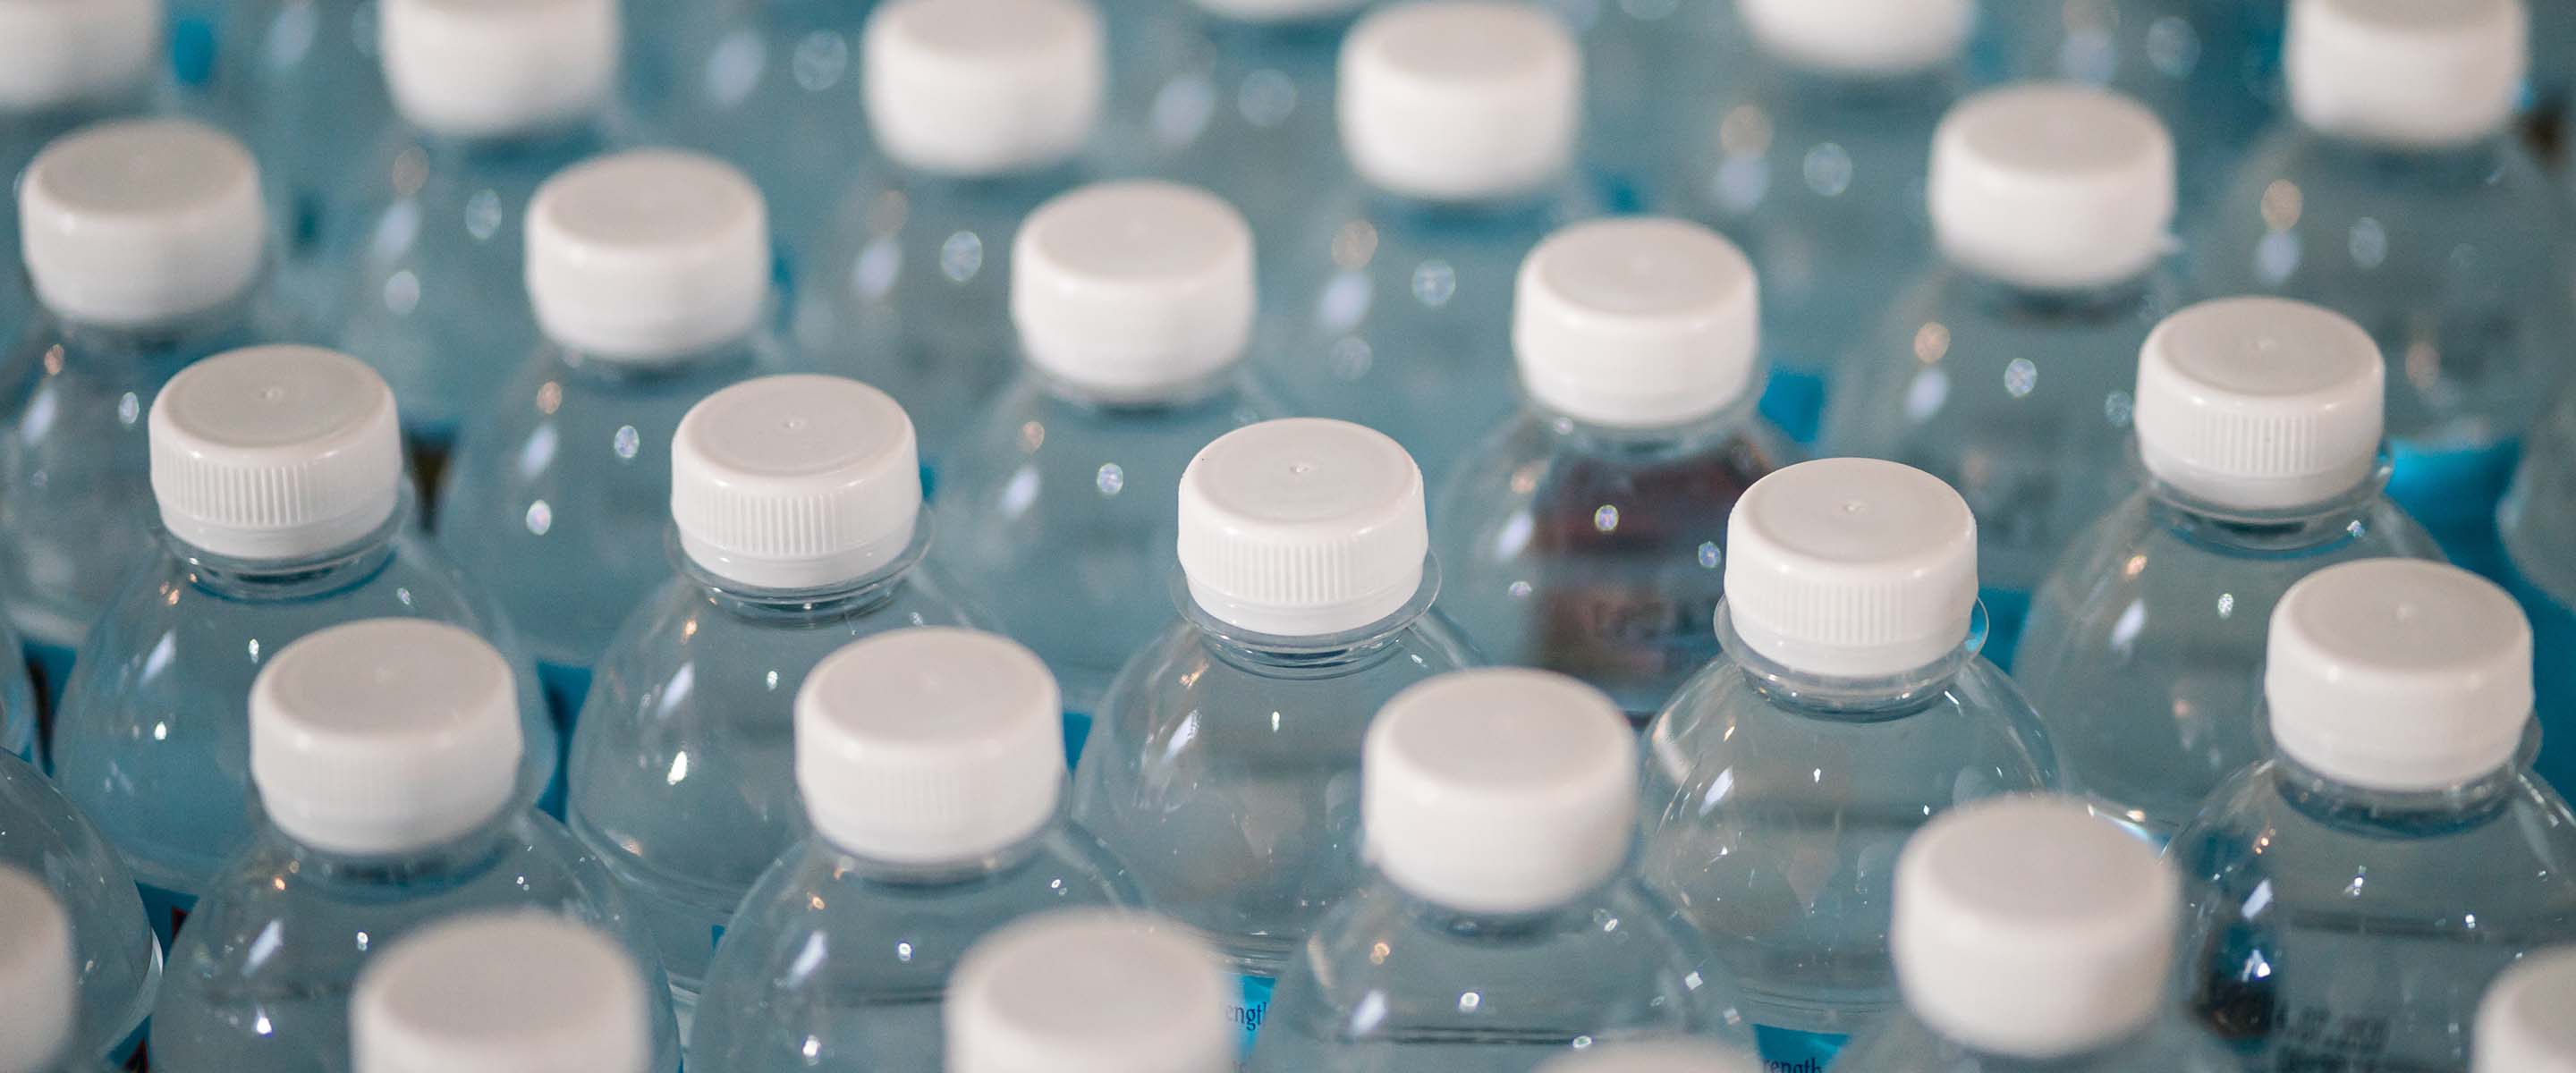 Plastic bottles are material.